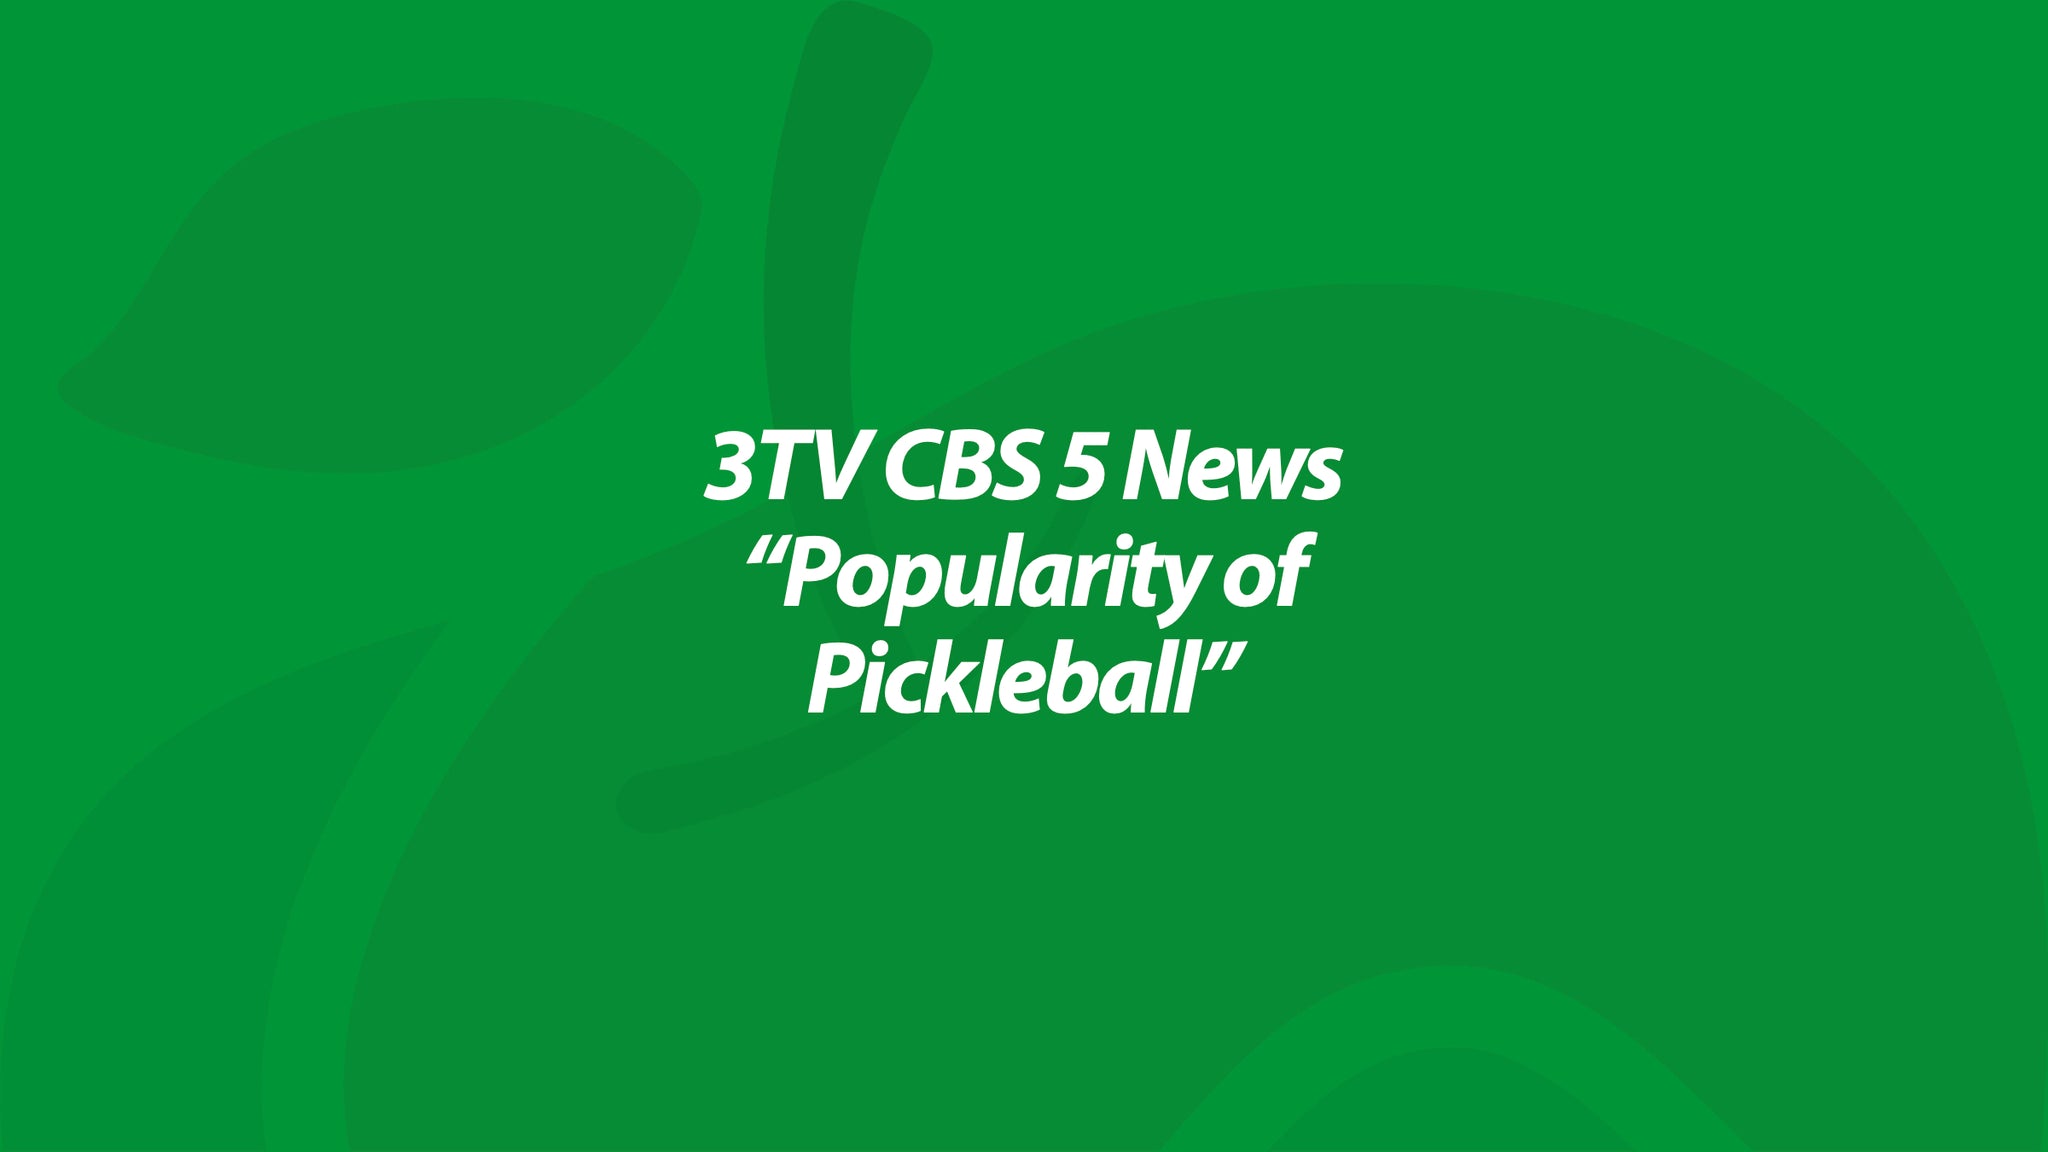 3TV CBS 5 News - "Popularity of Pickleball"